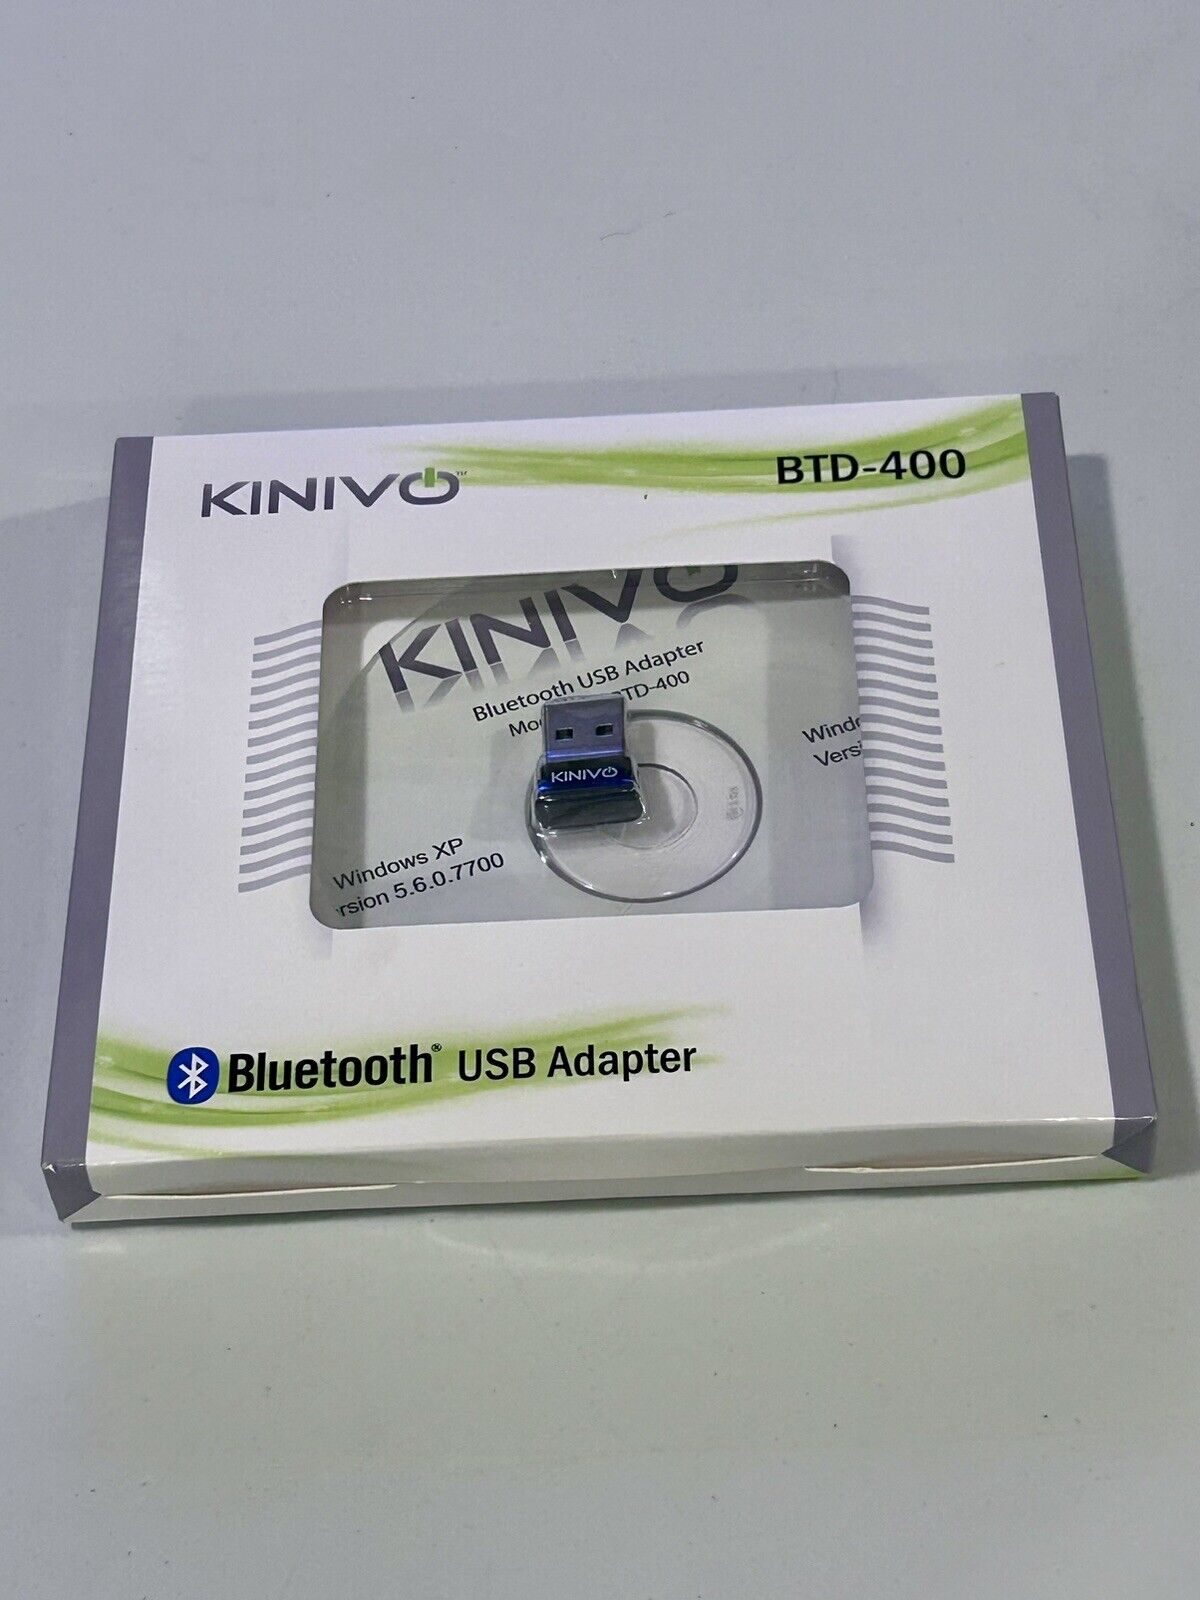 NEW Kinivo BTD-400 Bluetooth USB Adapter for PC- Windows XP, Vista, 7 - 8